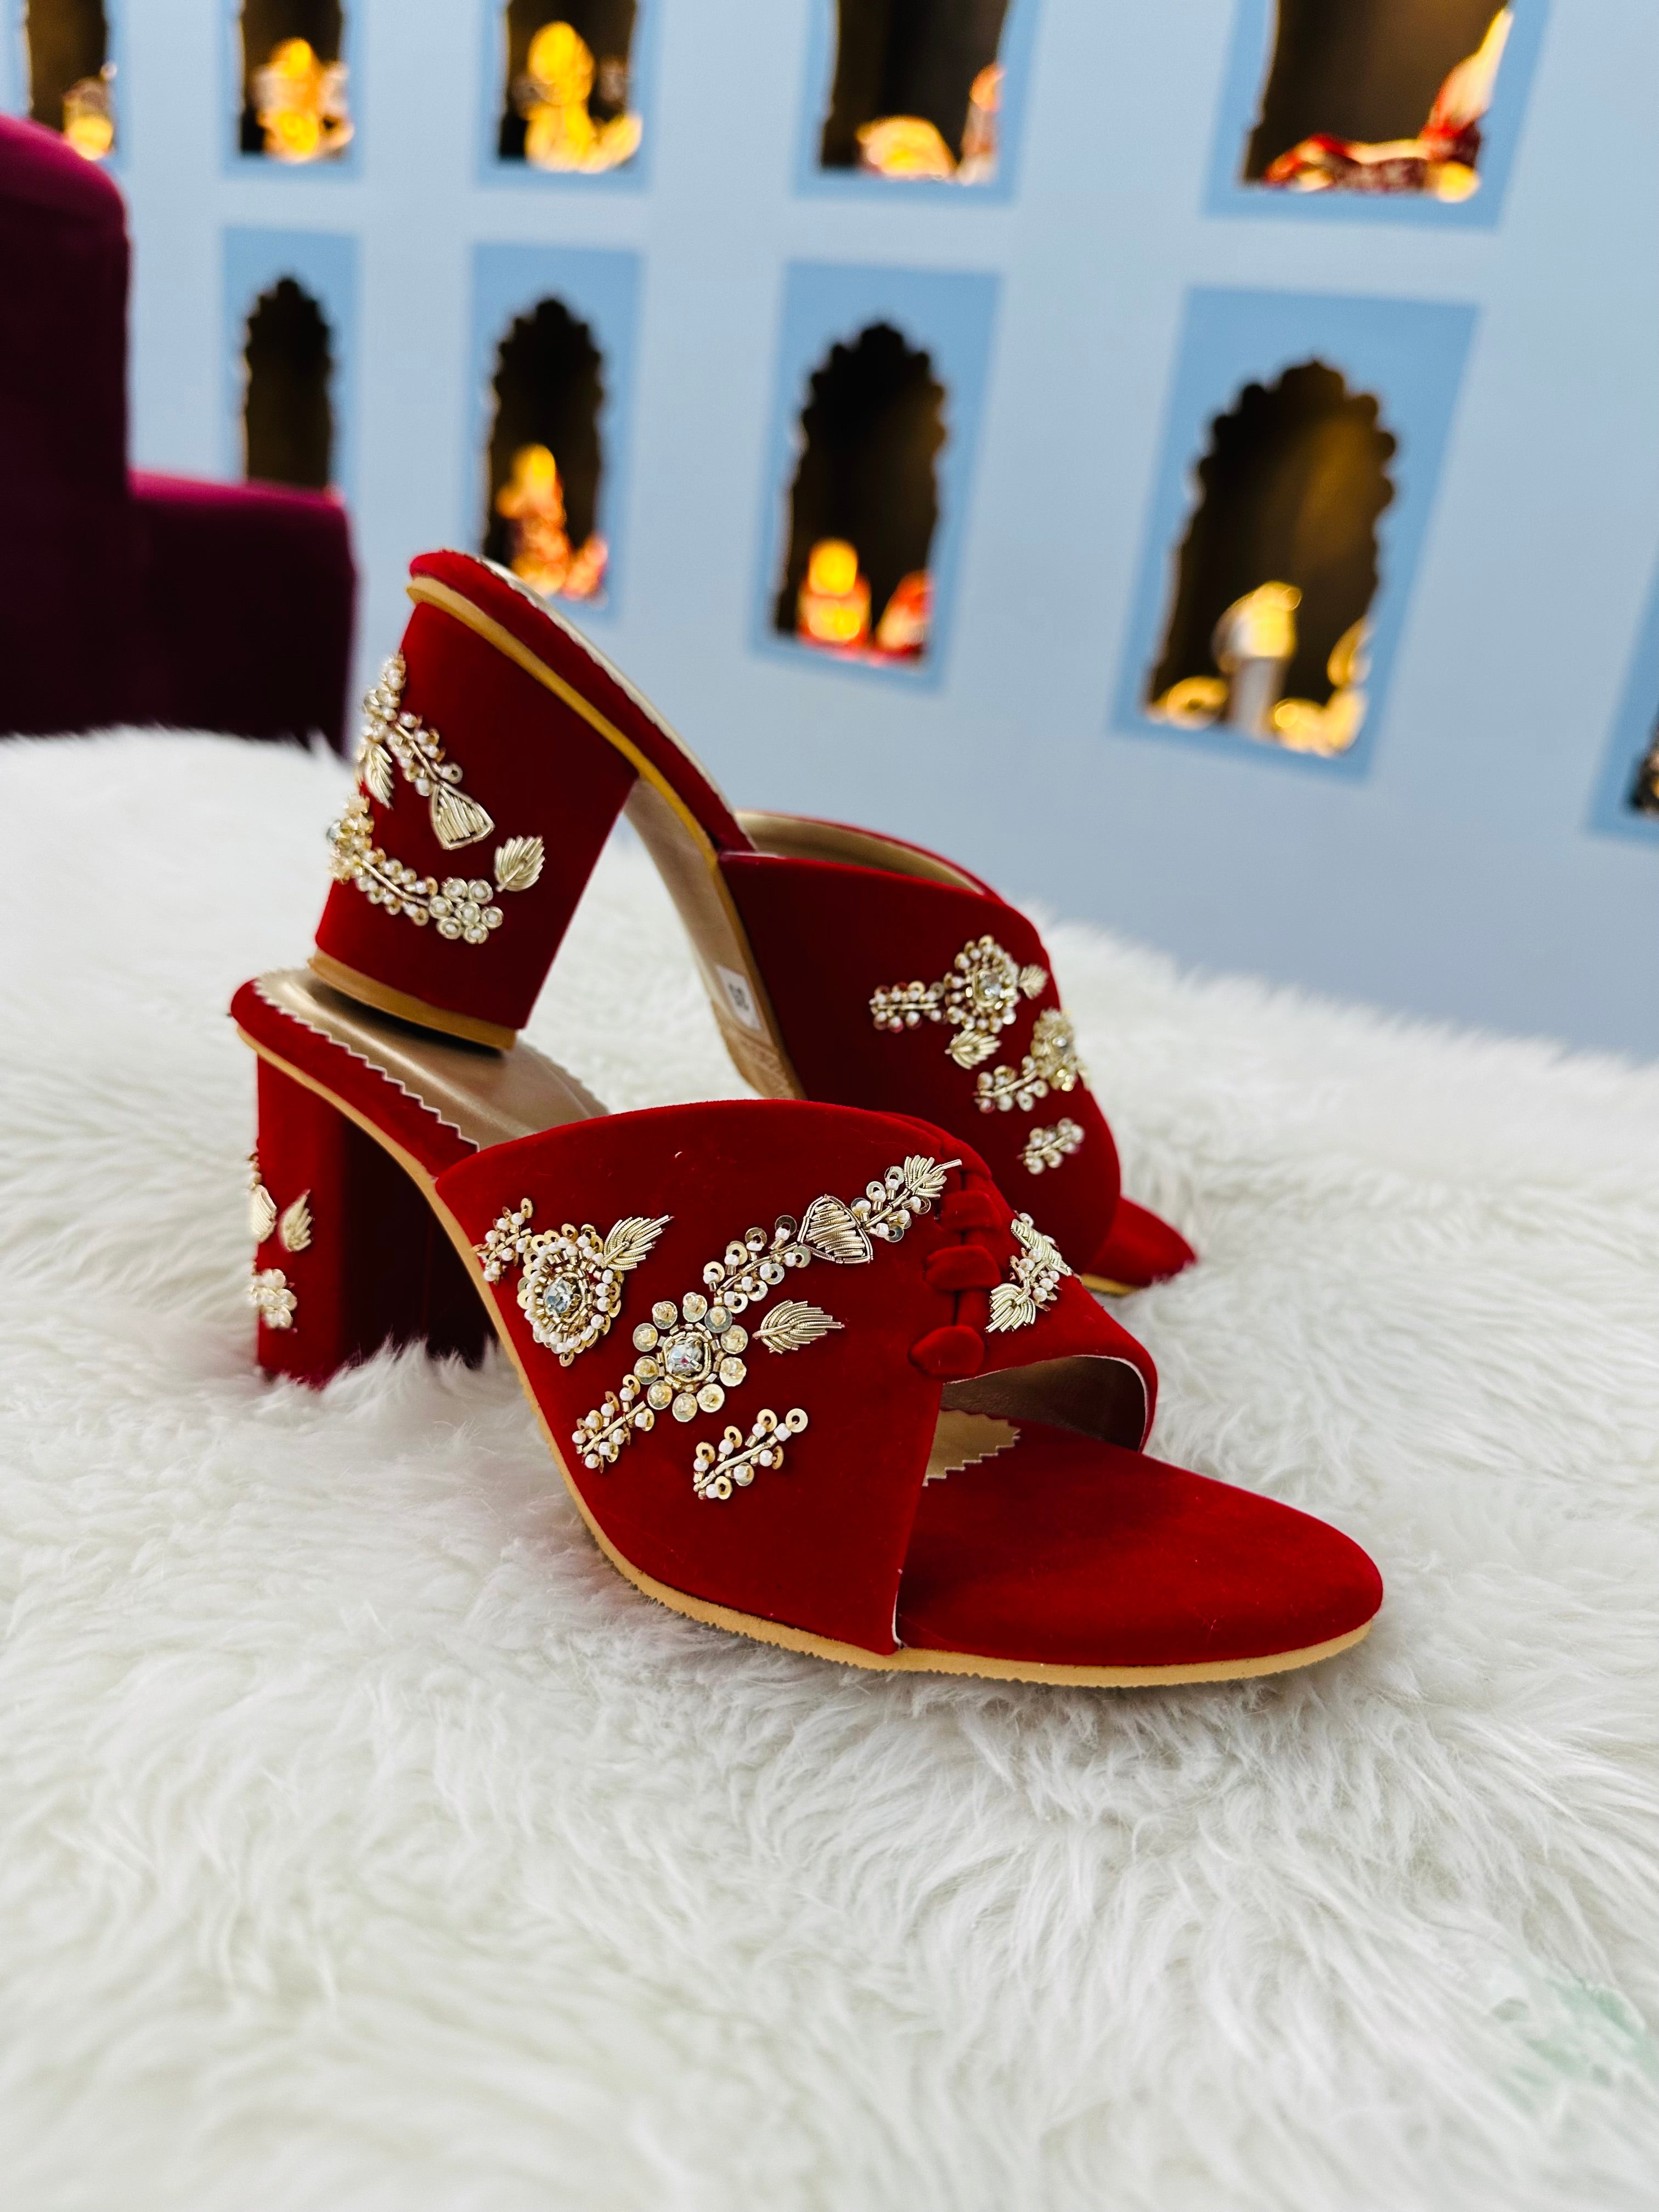 Ladies Low Heel Bridal Sandals, Size: 6-11 at Rs 370/pair in New Delhi |  ID: 20722213488